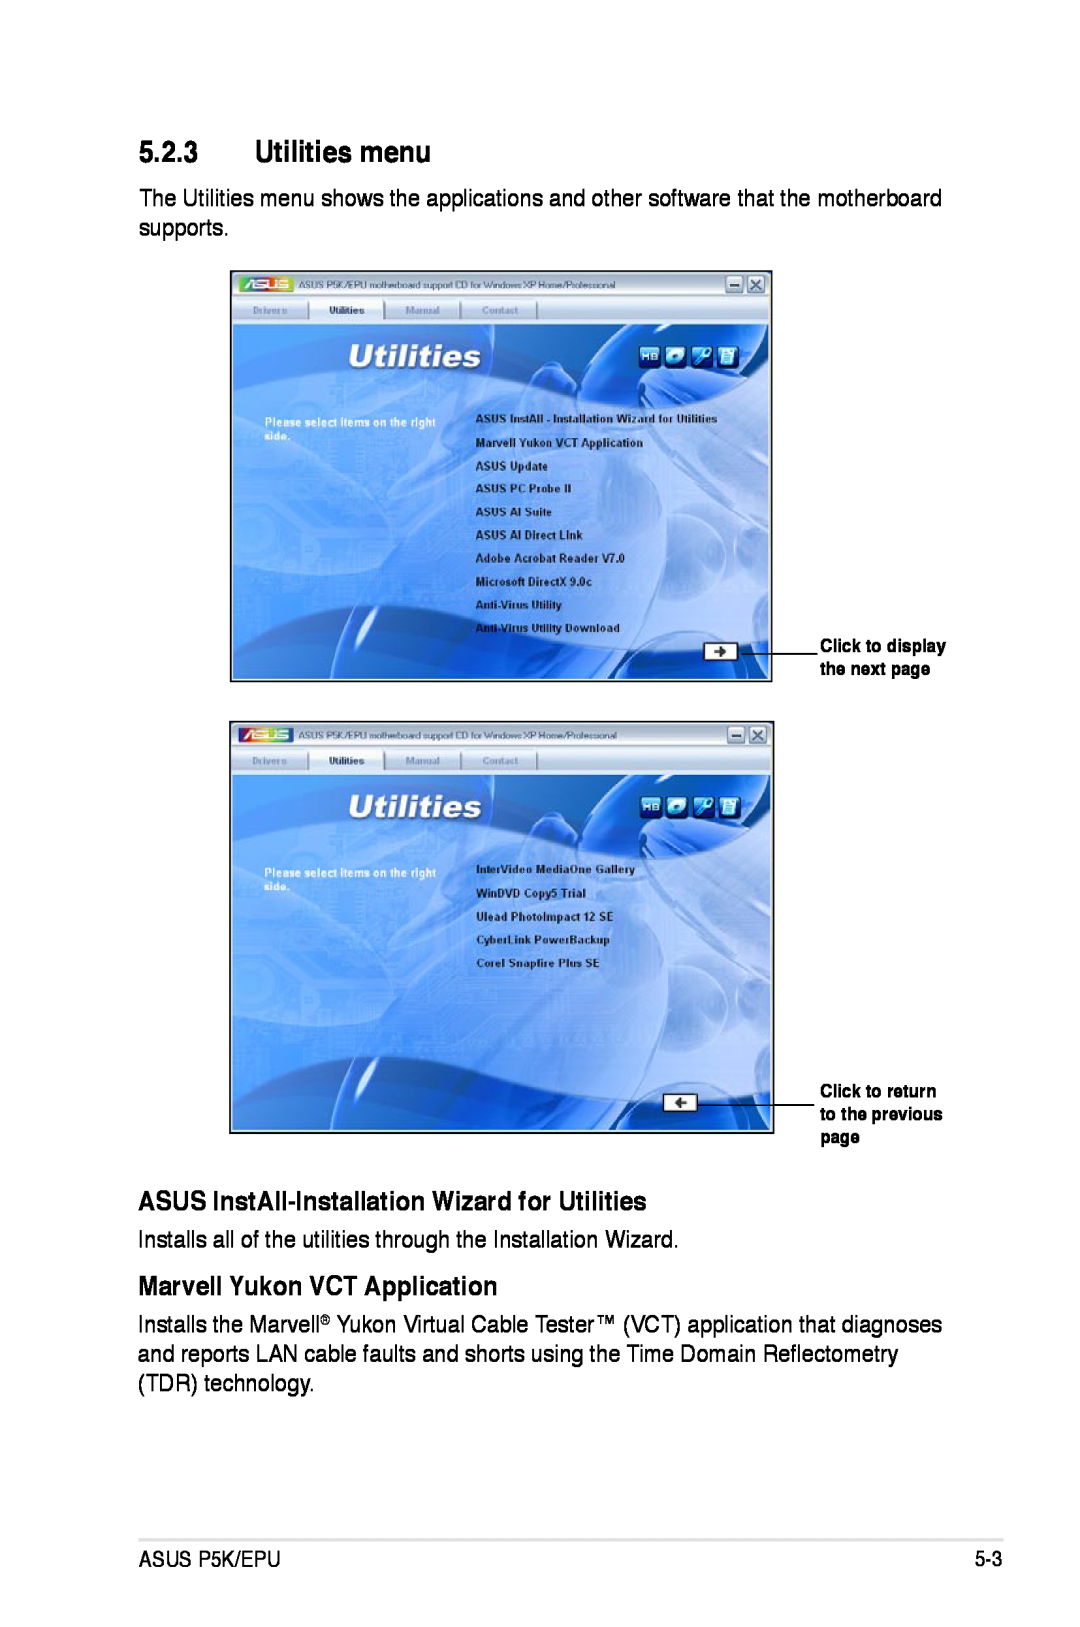 Asus P5K/EPU manual Utilities menu, ASUS InstAll-Installation Wizard for Utilities, Marvell Yukon VCT Application 